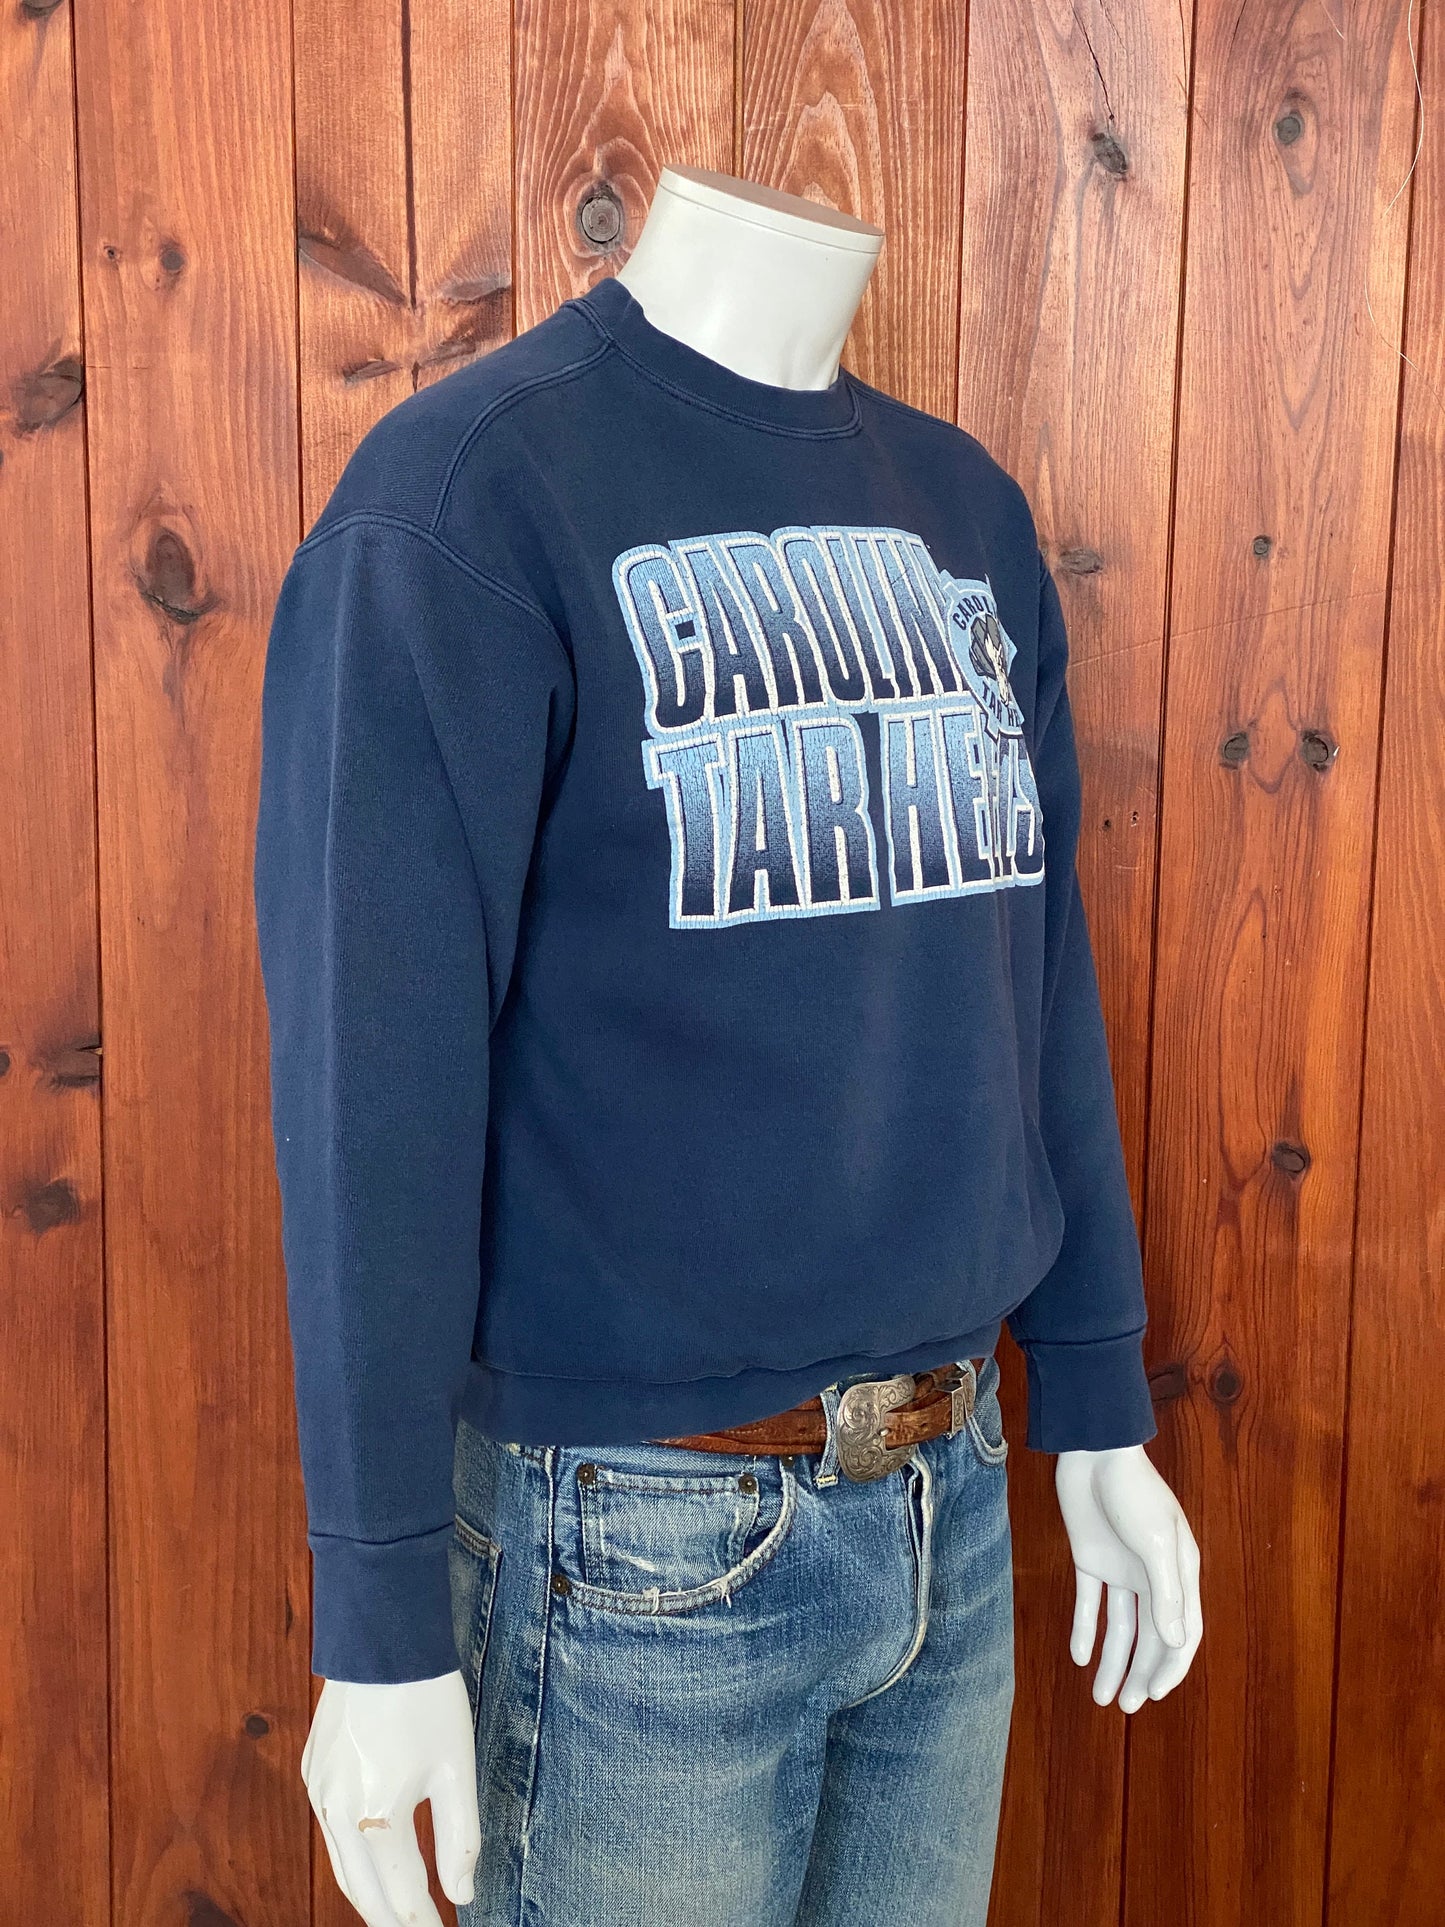 Vintage 90s Carolina Tar Heels Starter Sweatshirt - Size M | Made in USA | Retro Collegiate Style